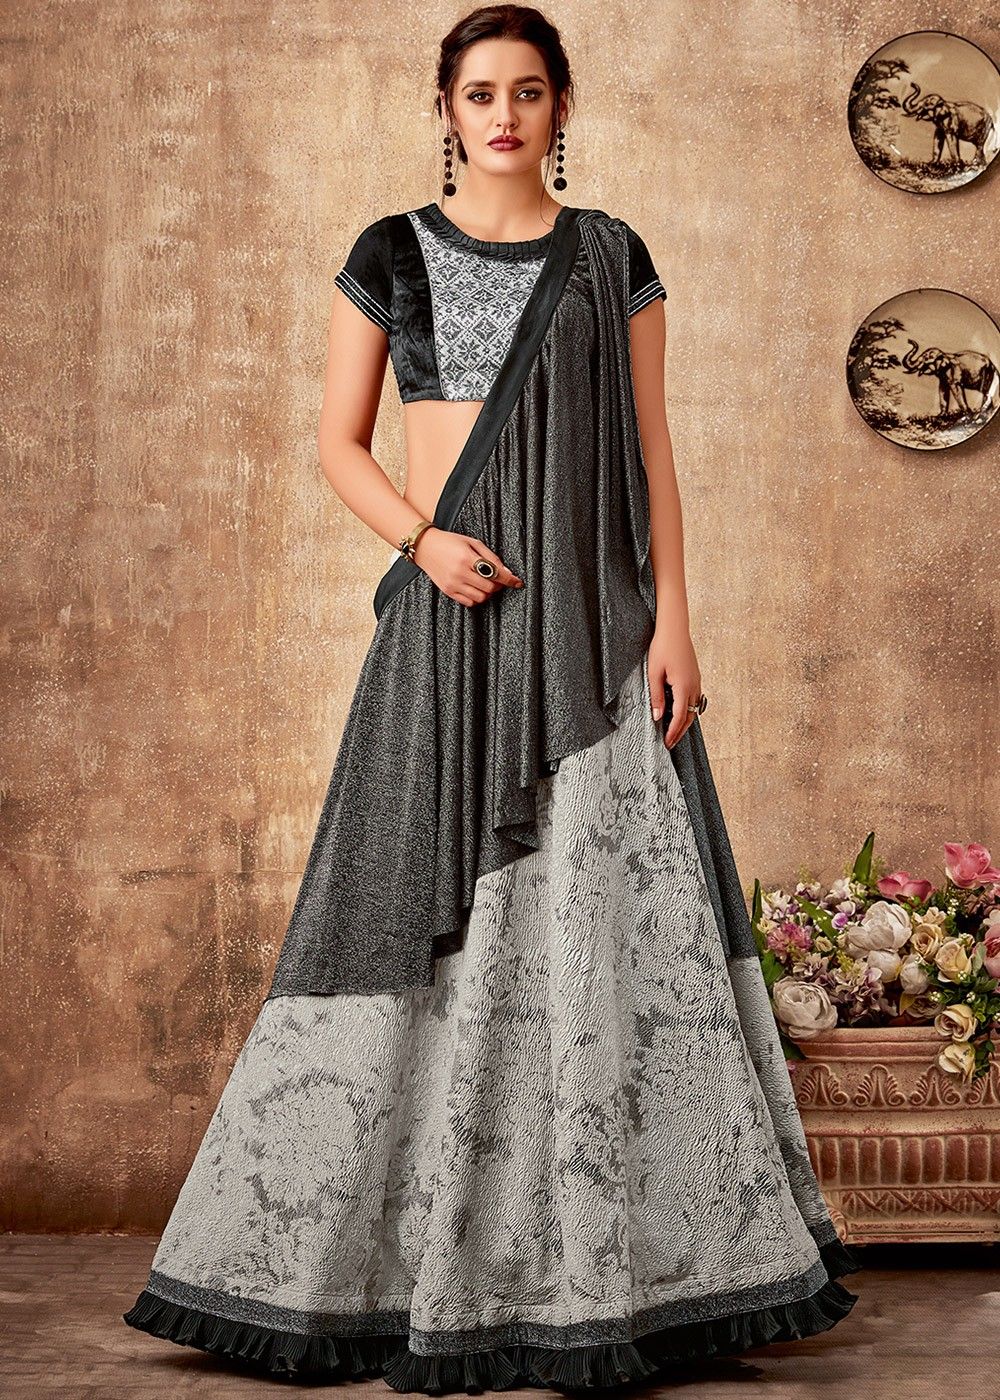 Best Of Wedding Season - Top Lehenga Saree Designs | magicpin blog-sgquangbinhtourist.com.vn